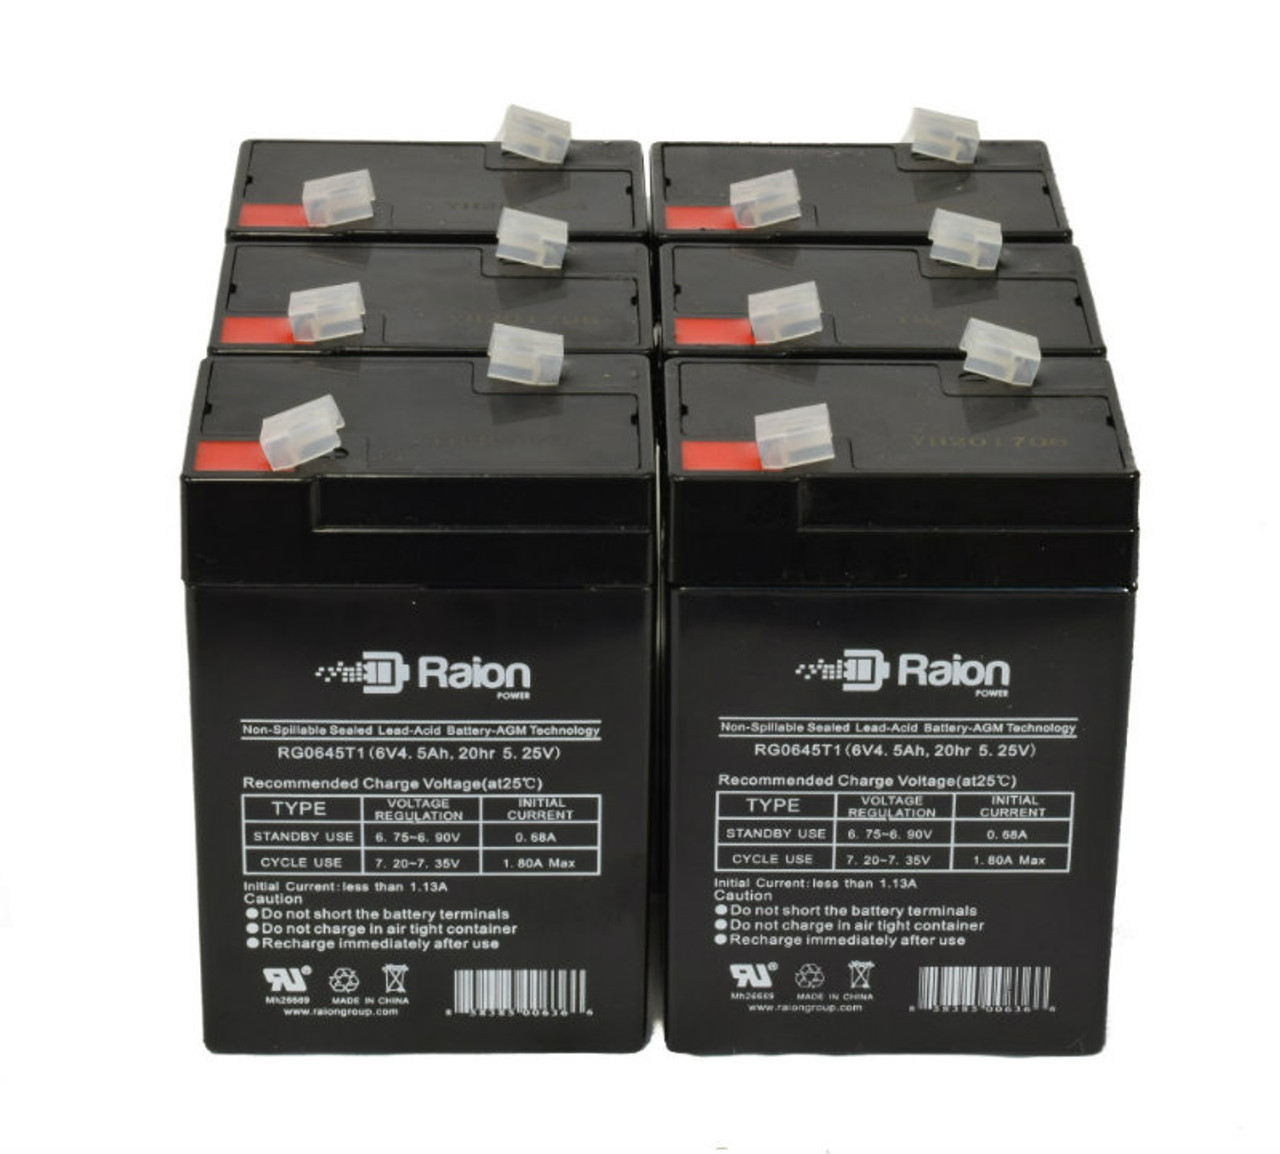 Raion Power 6 Volt 4.5Ah RG0645T1 Replacement Battery for Leoch LPC6-5.6 - 6 Pack